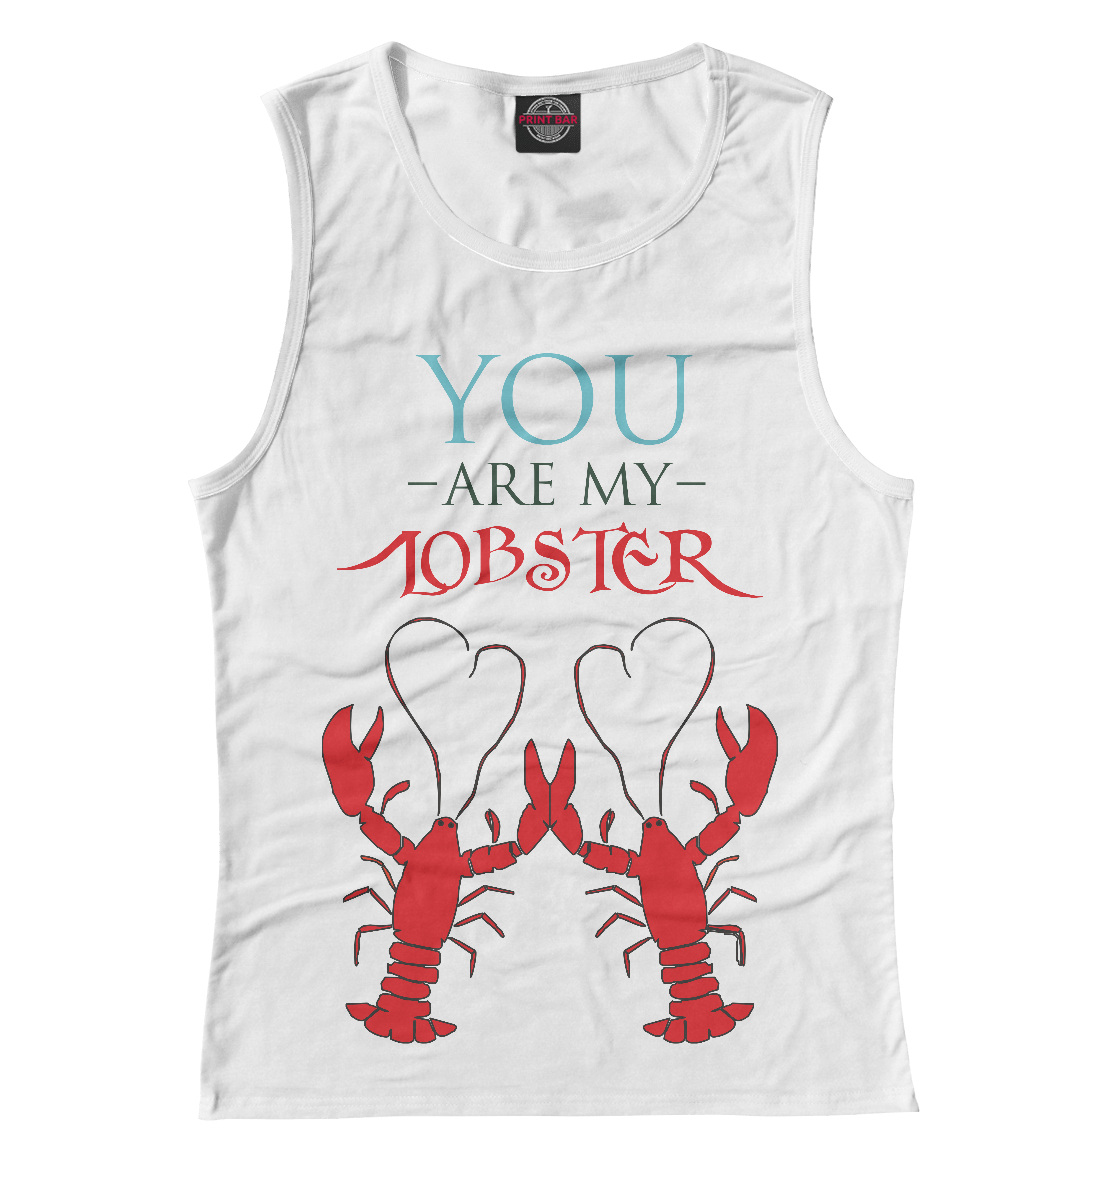 Женская Майка с принтом You are my lobster, артикул 14F-969615-may-1mp